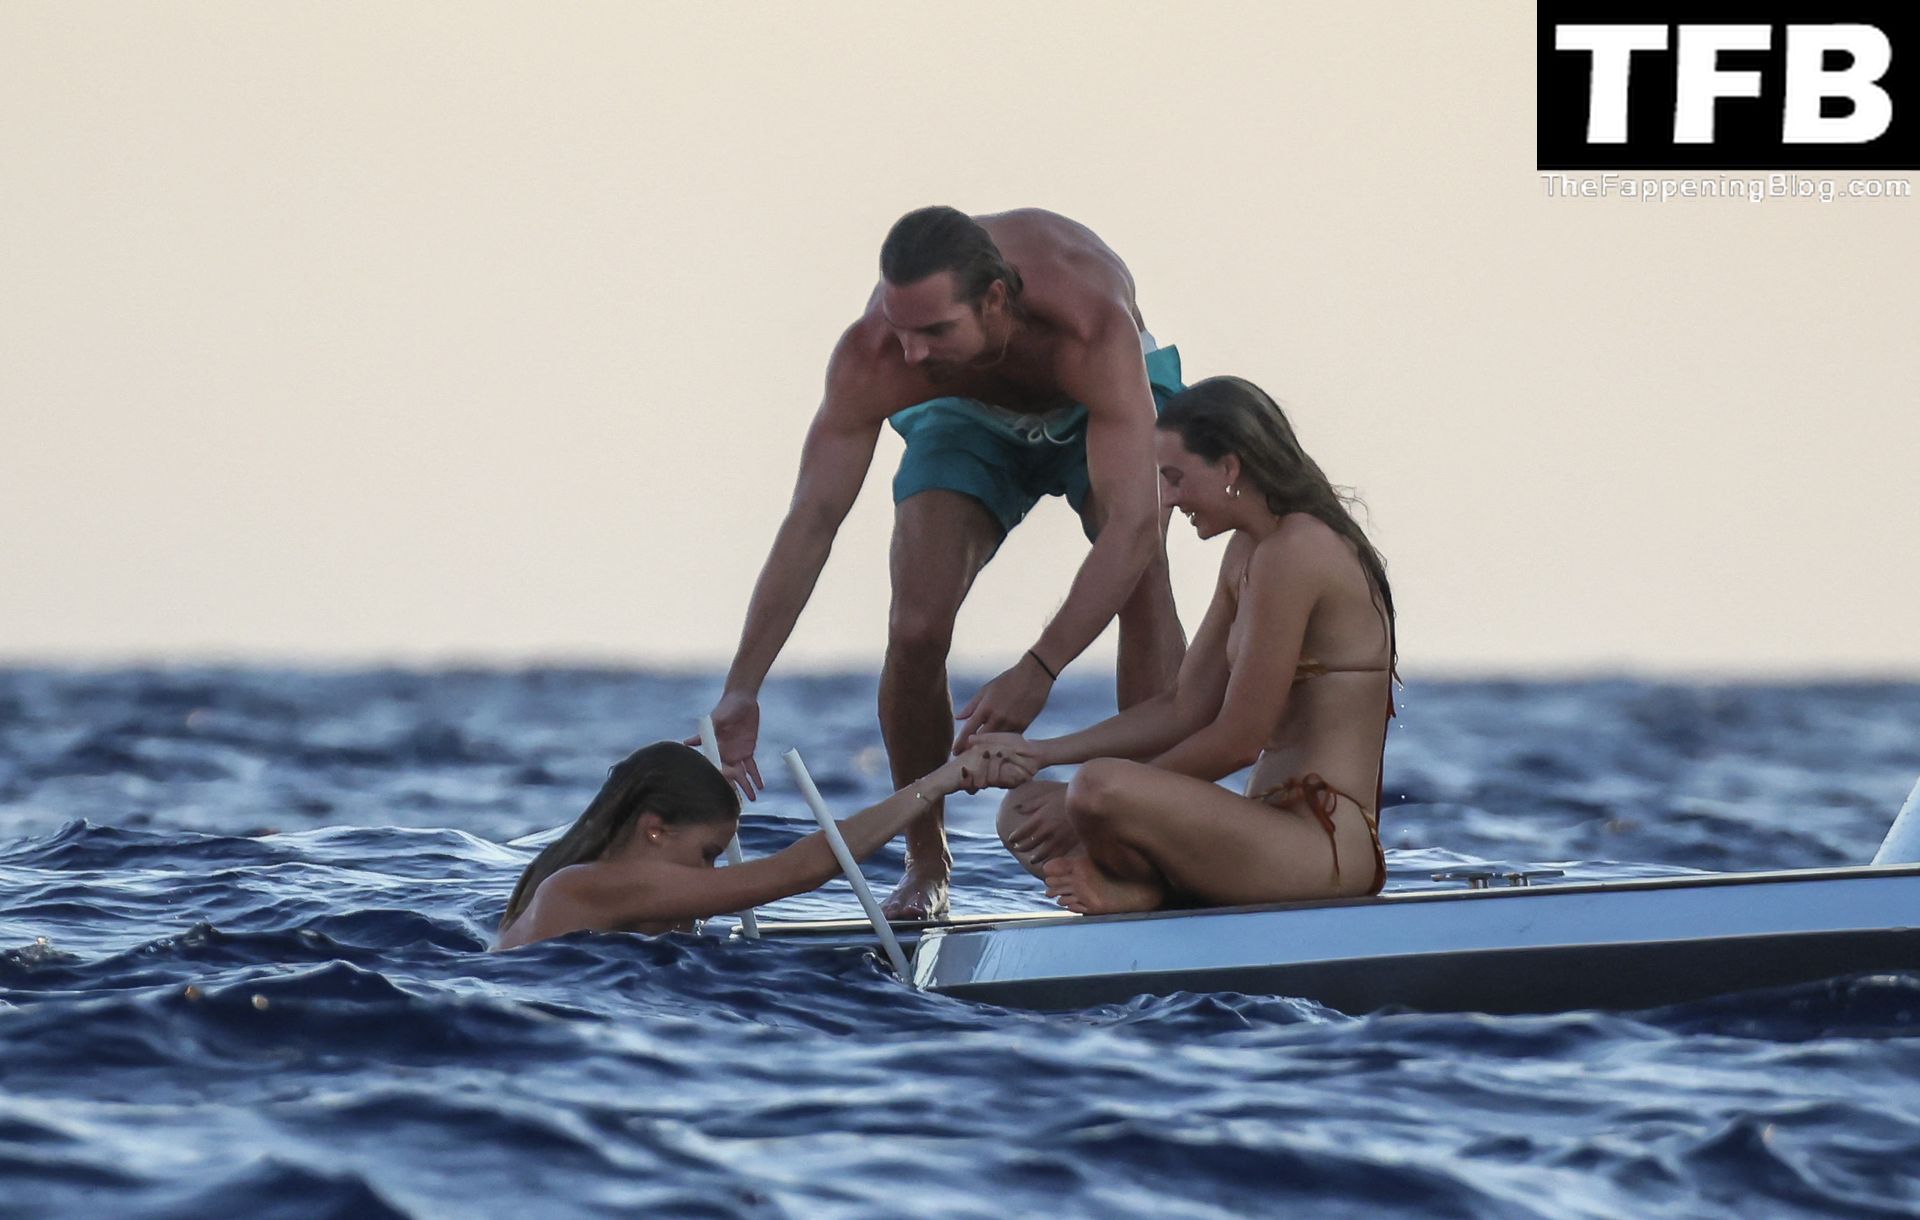 Margot Robbie Sexy The Fappening Blog 32 - Margot Robbie & Rami Malek Enjoy a Fun Boat Day in Formentera (43 Photos)